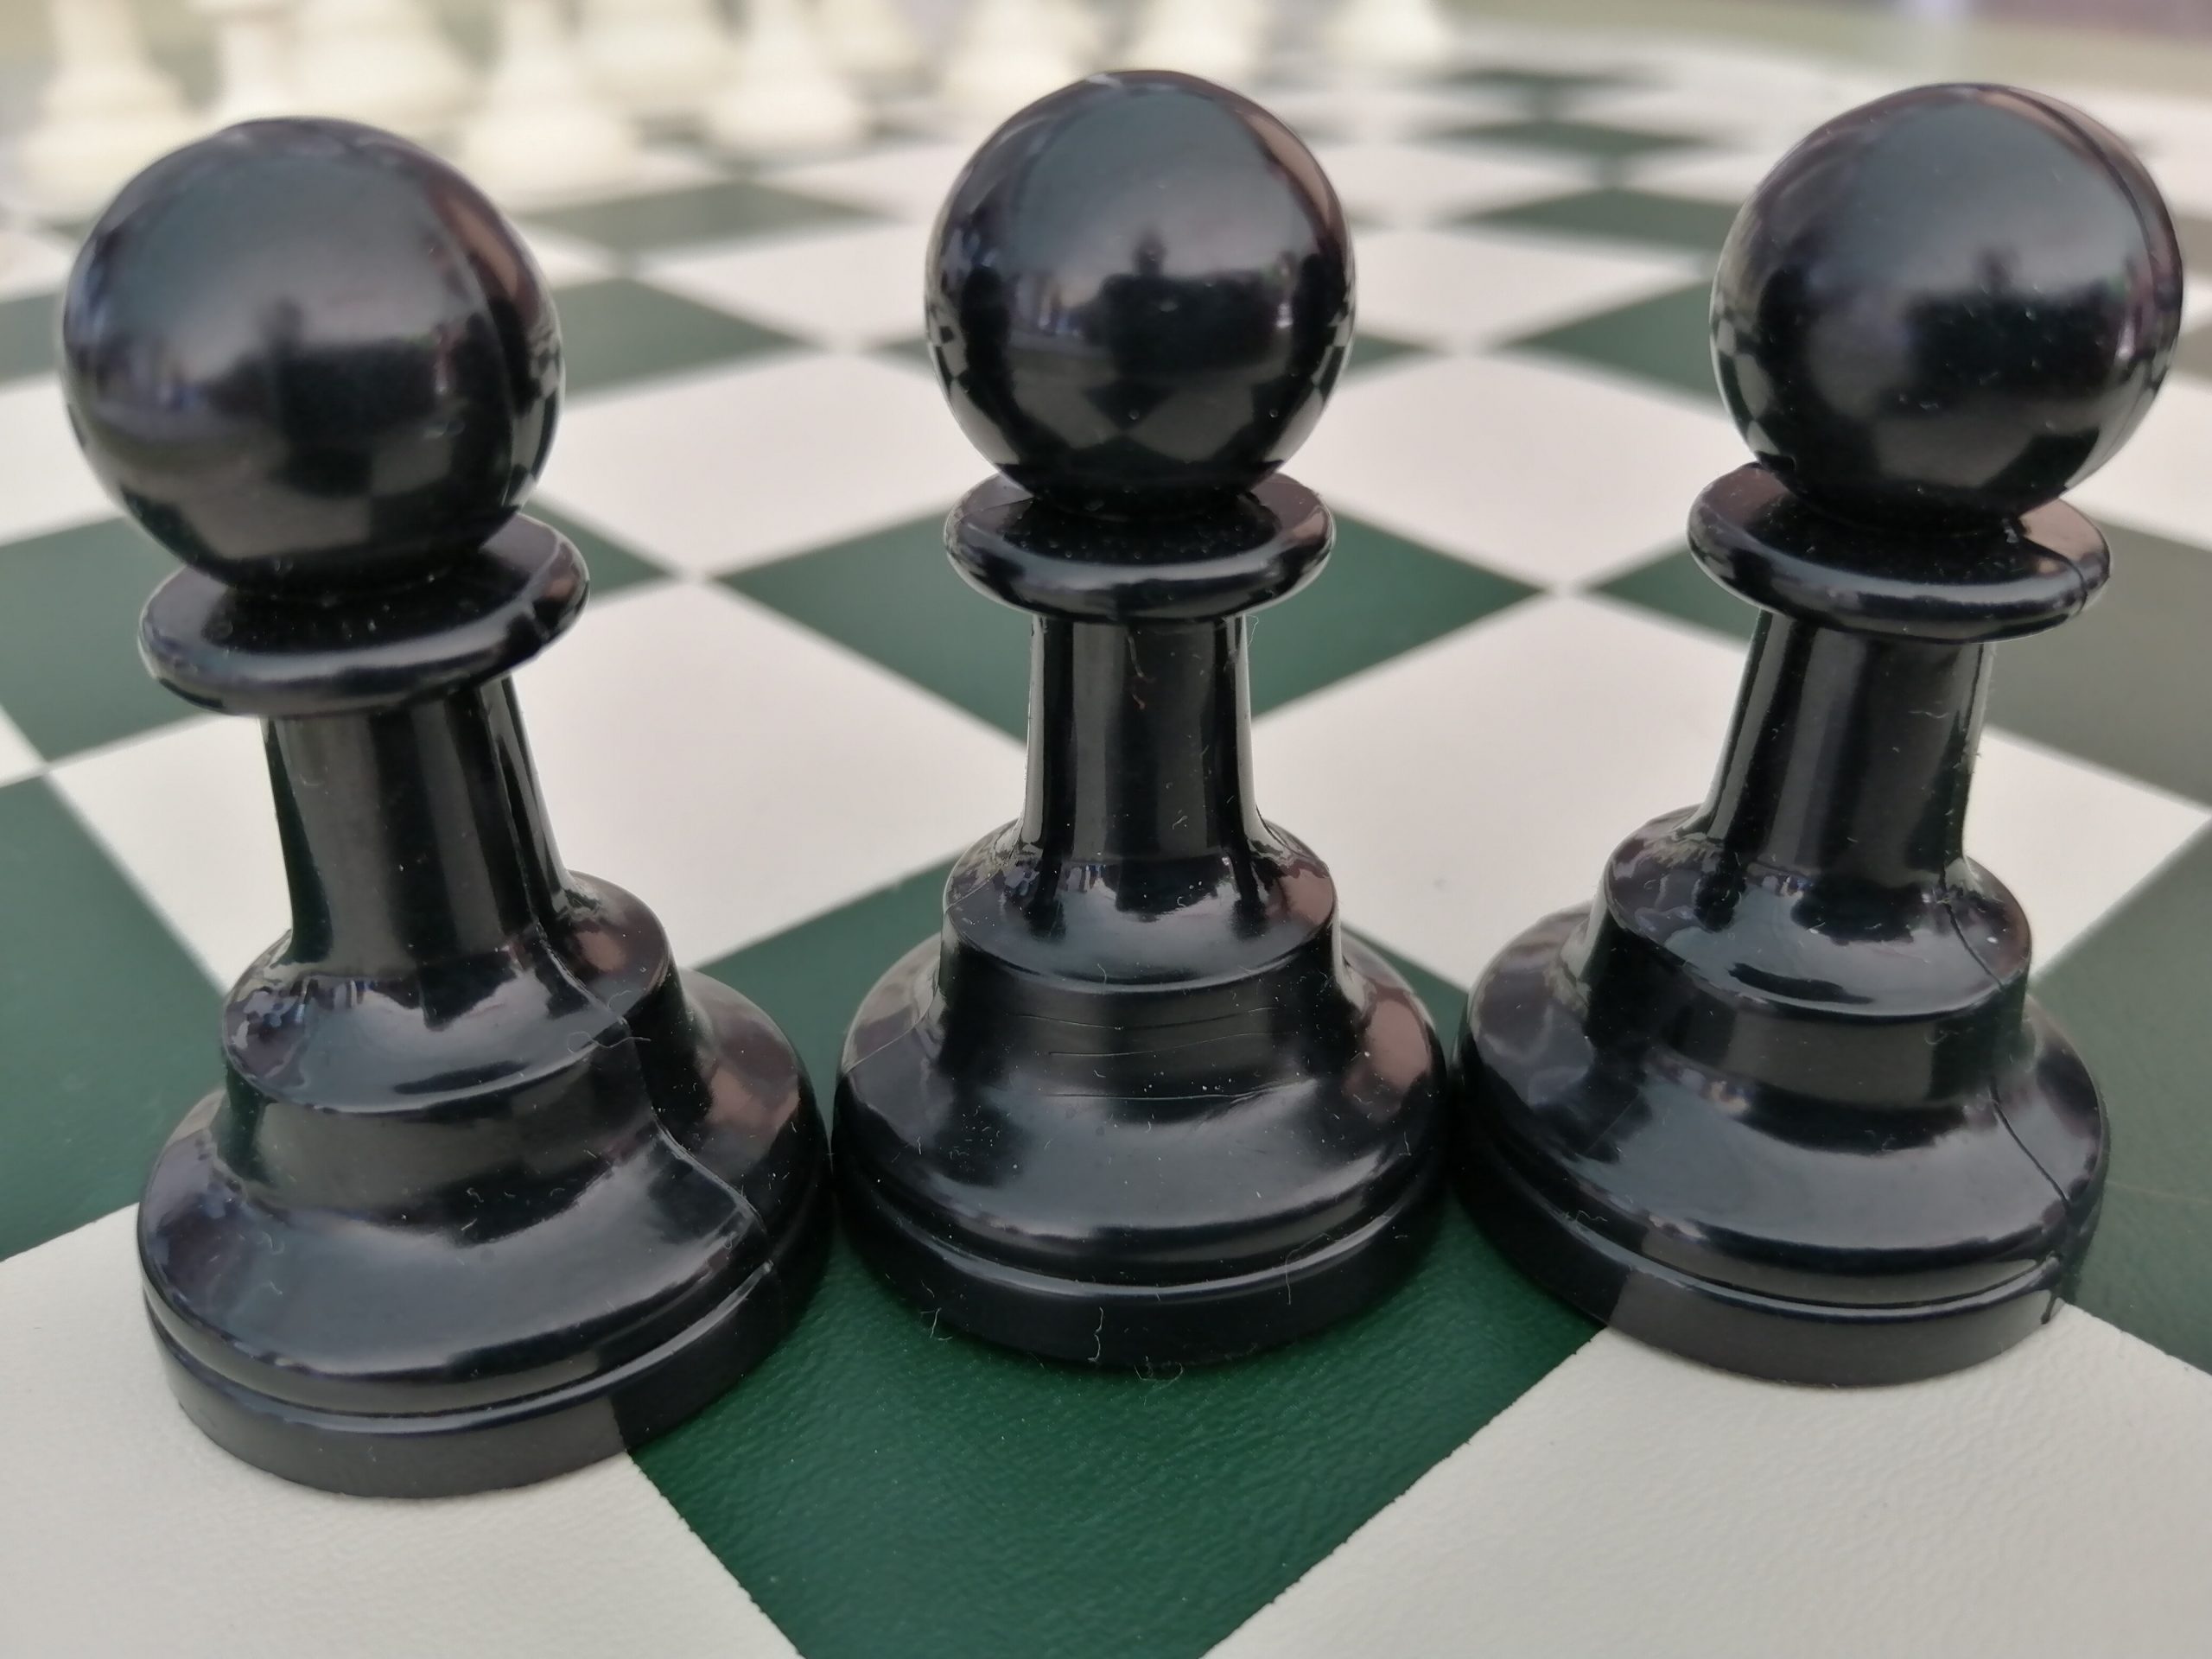 Torneo de ajedrez online 3 check, tres jaques y pierdes la partida